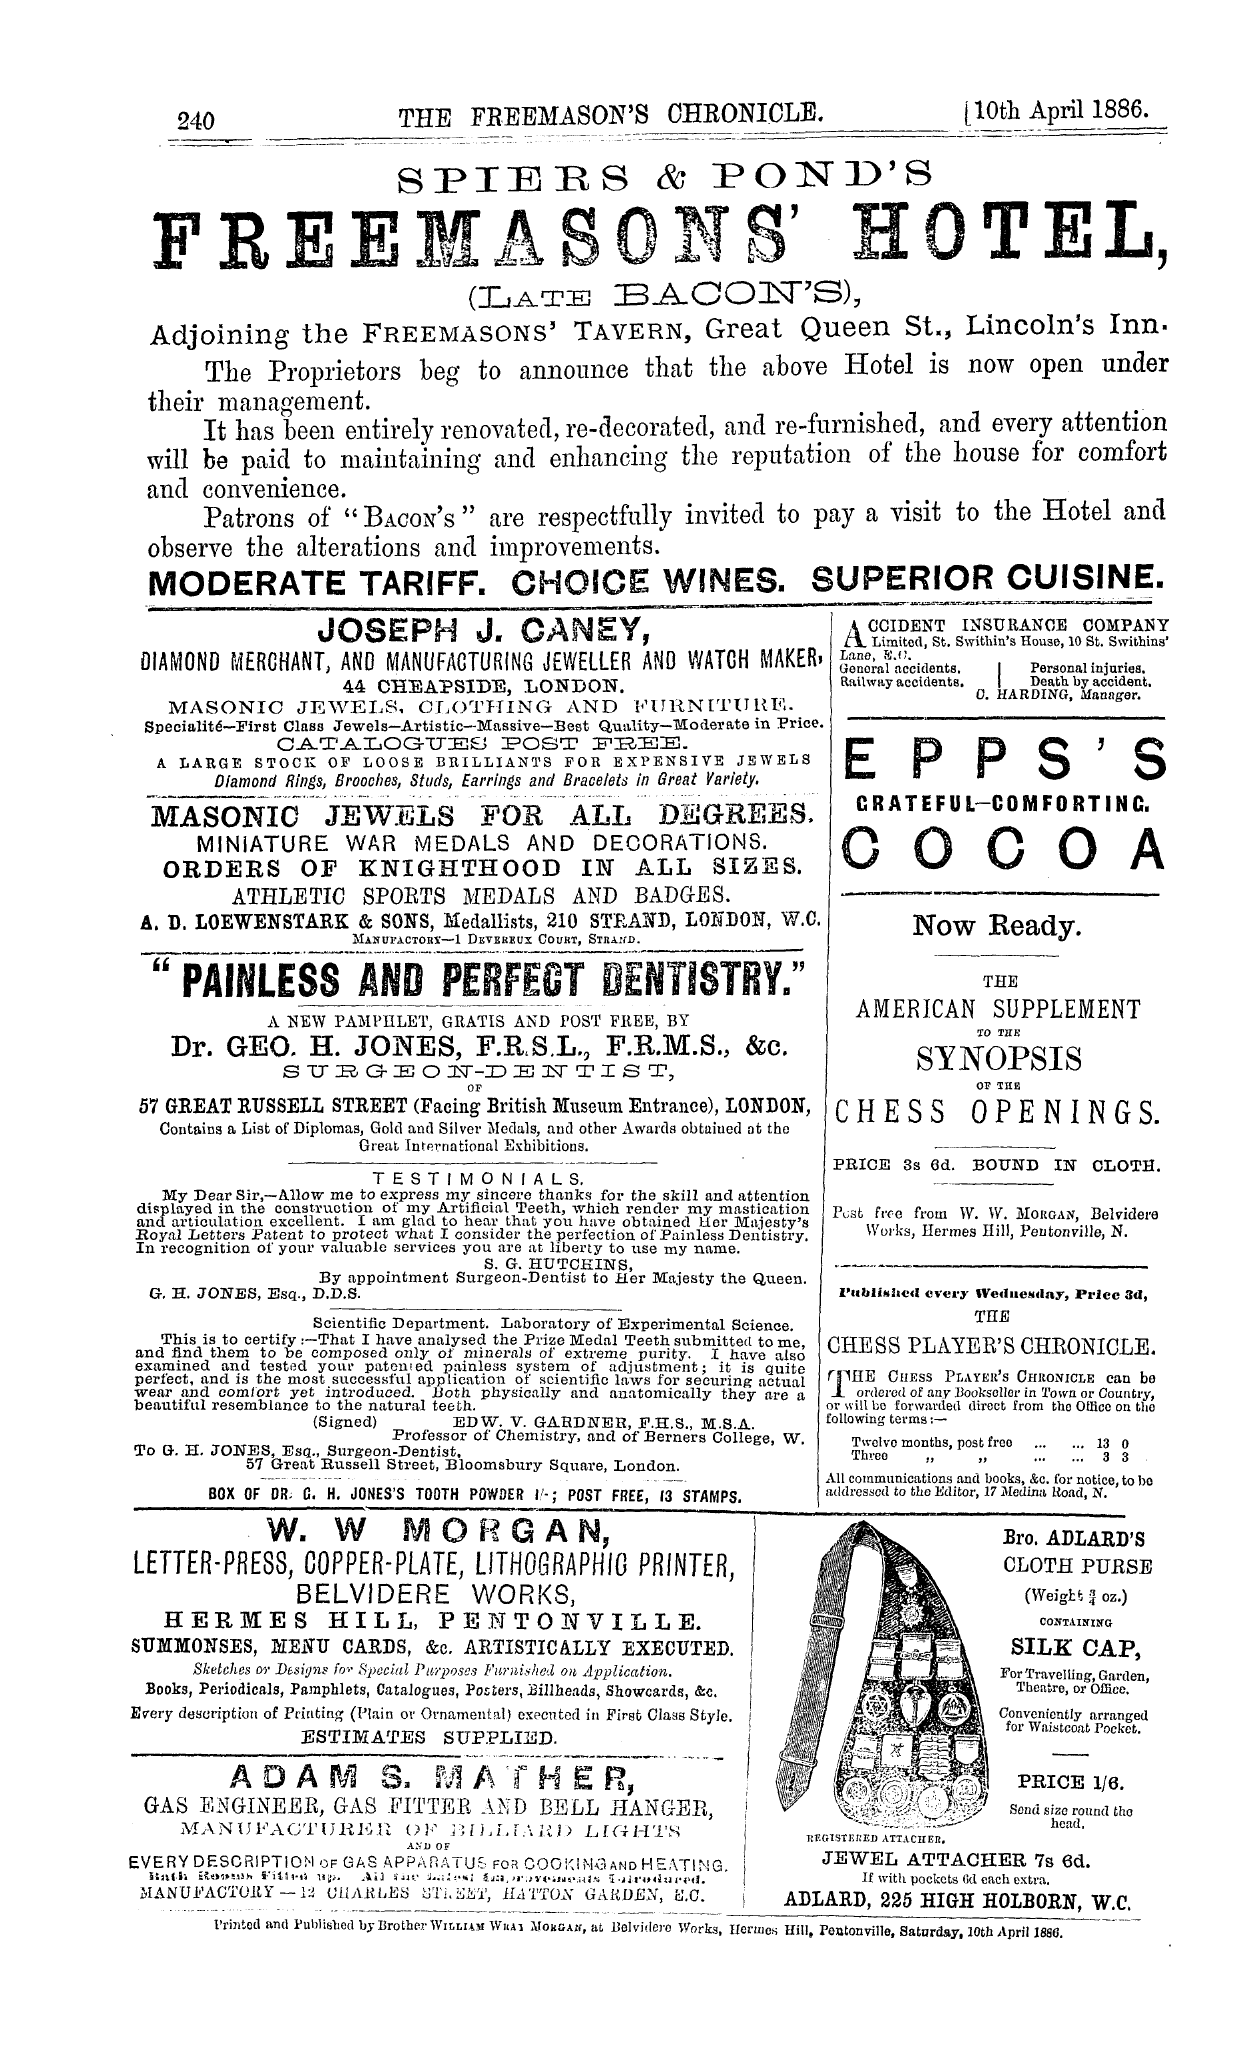 The Freemason's Chronicle: 1886-04-10 - Ad01603